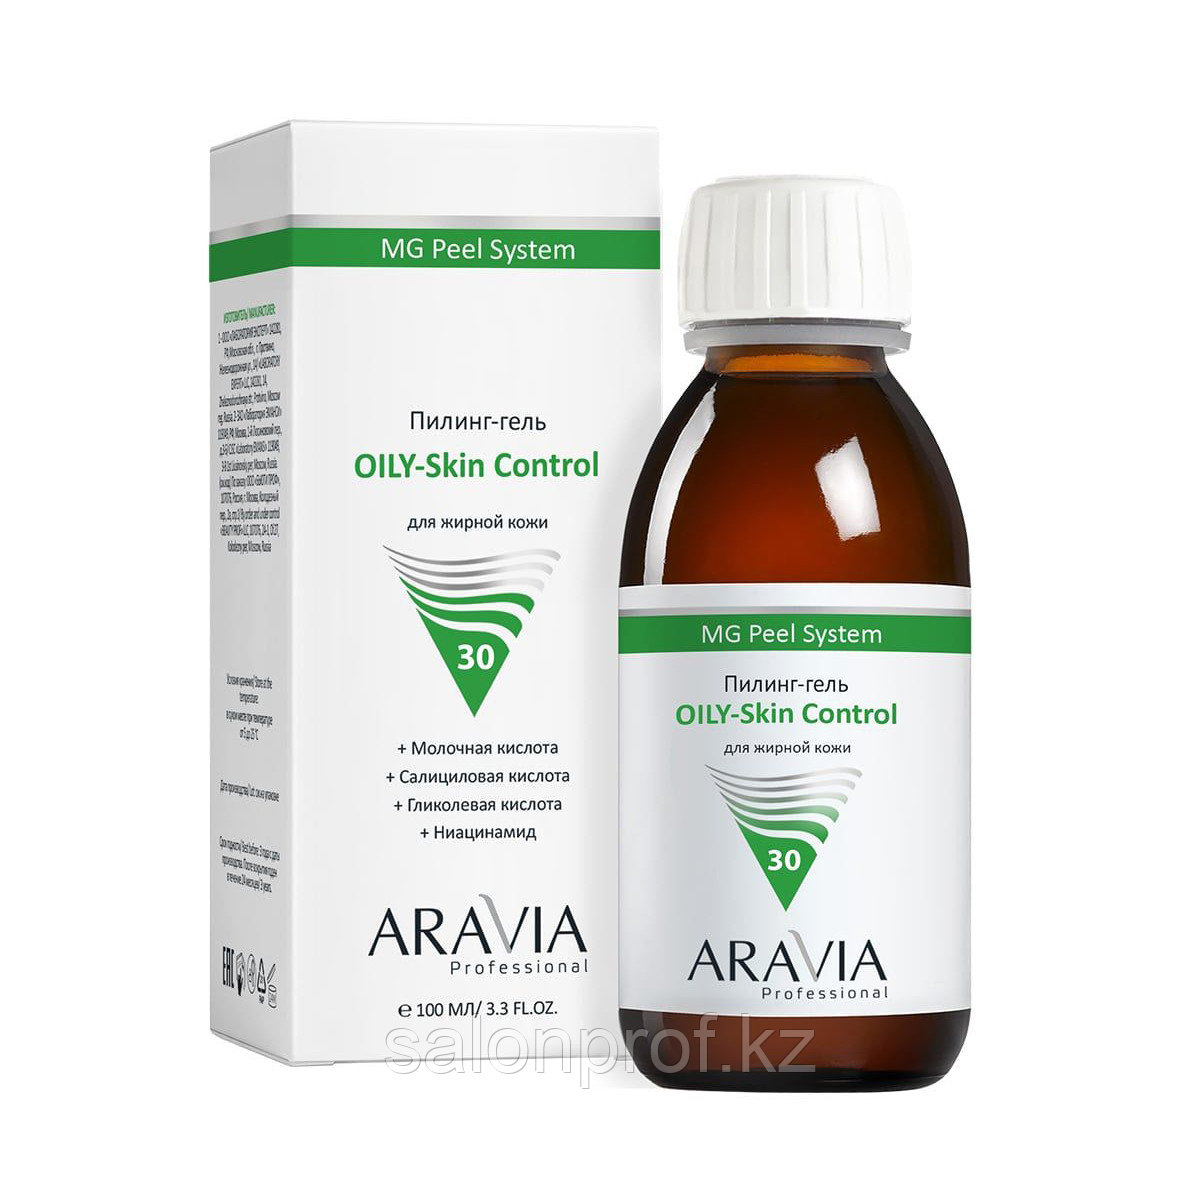 Пилинг-гель ARAVIA Professional OILY-Skin Control 100 мл №94482